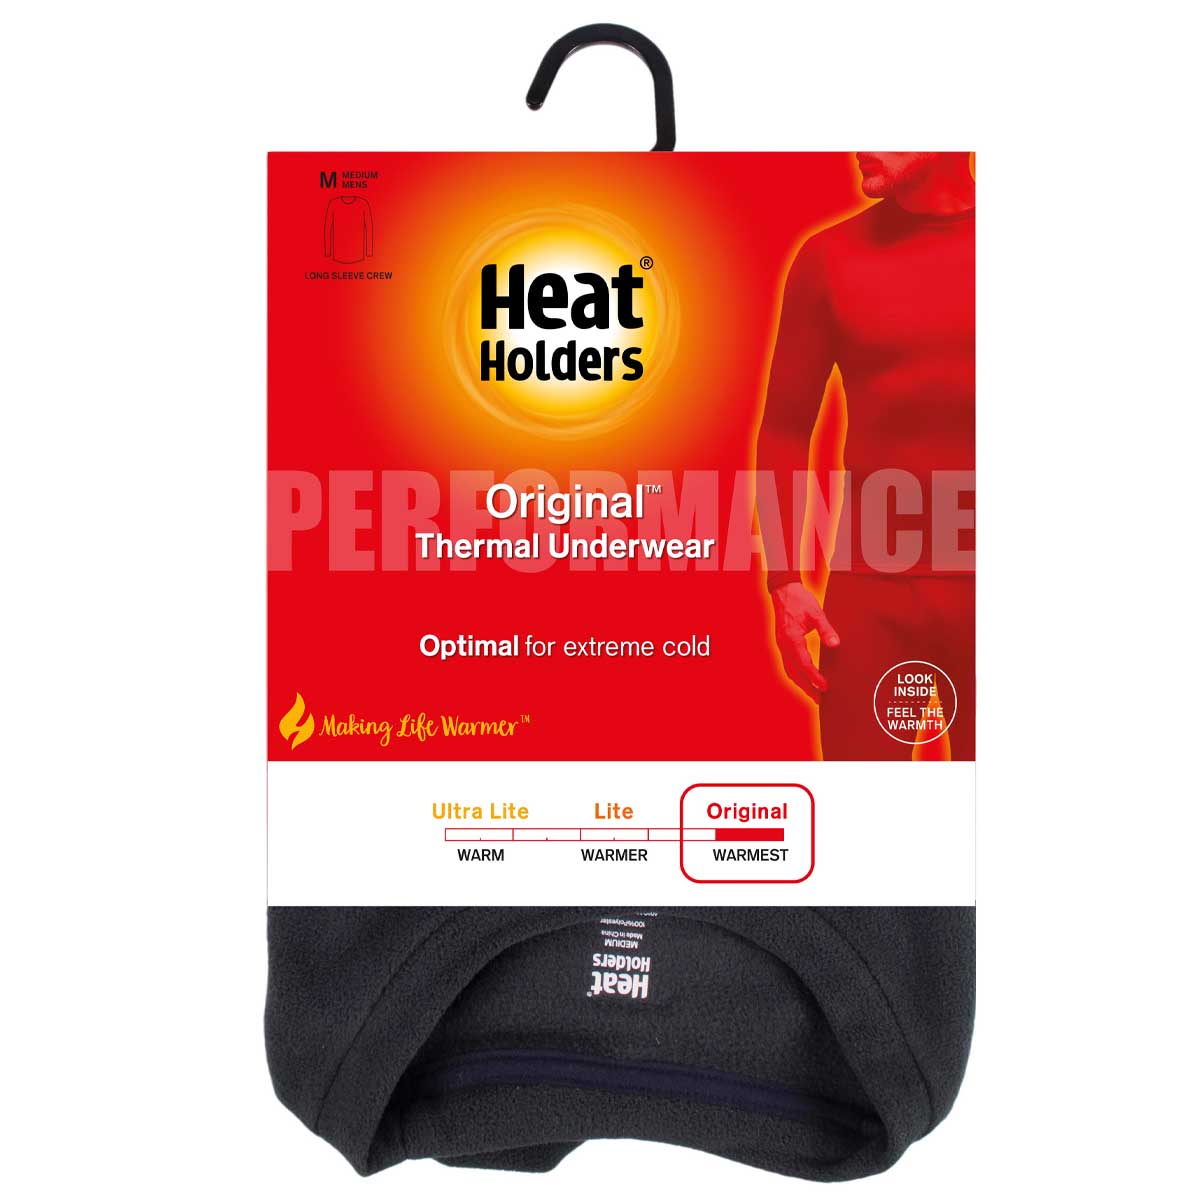 Heat Holders - Camiseta Primera Capa Térmica Frío Extremo